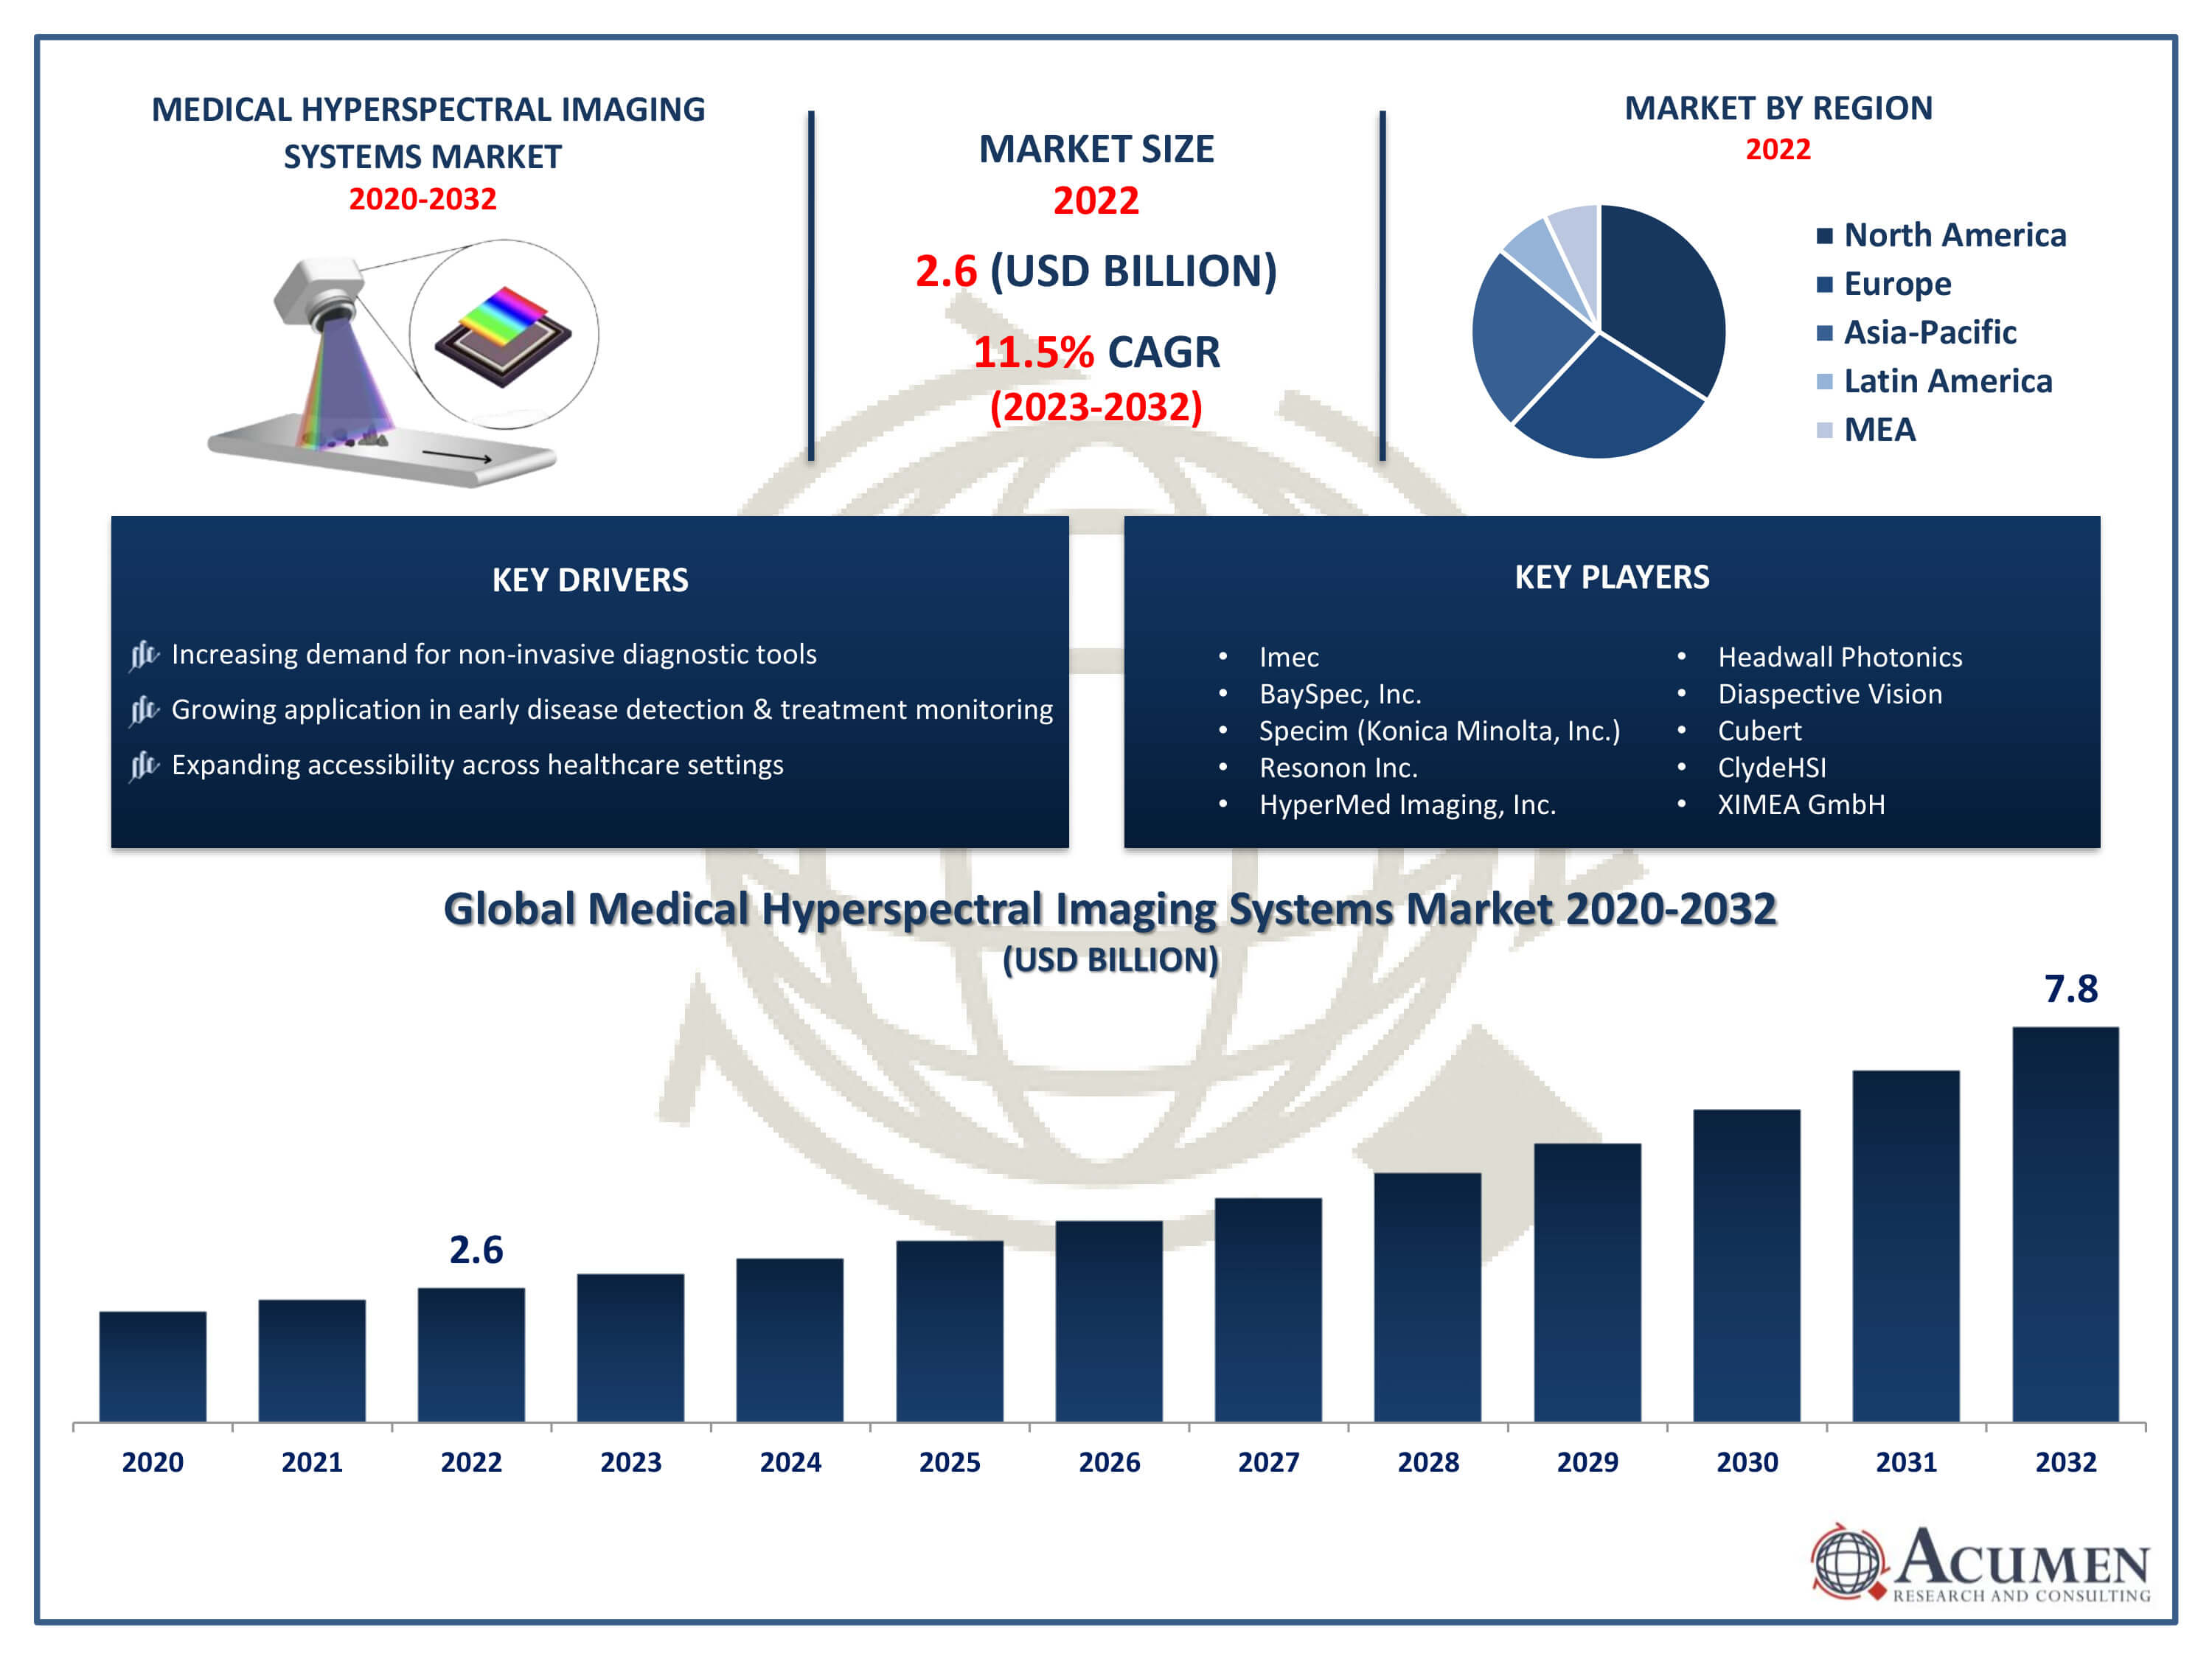 Medical Hyperspectral Imaging Systems Market Trends